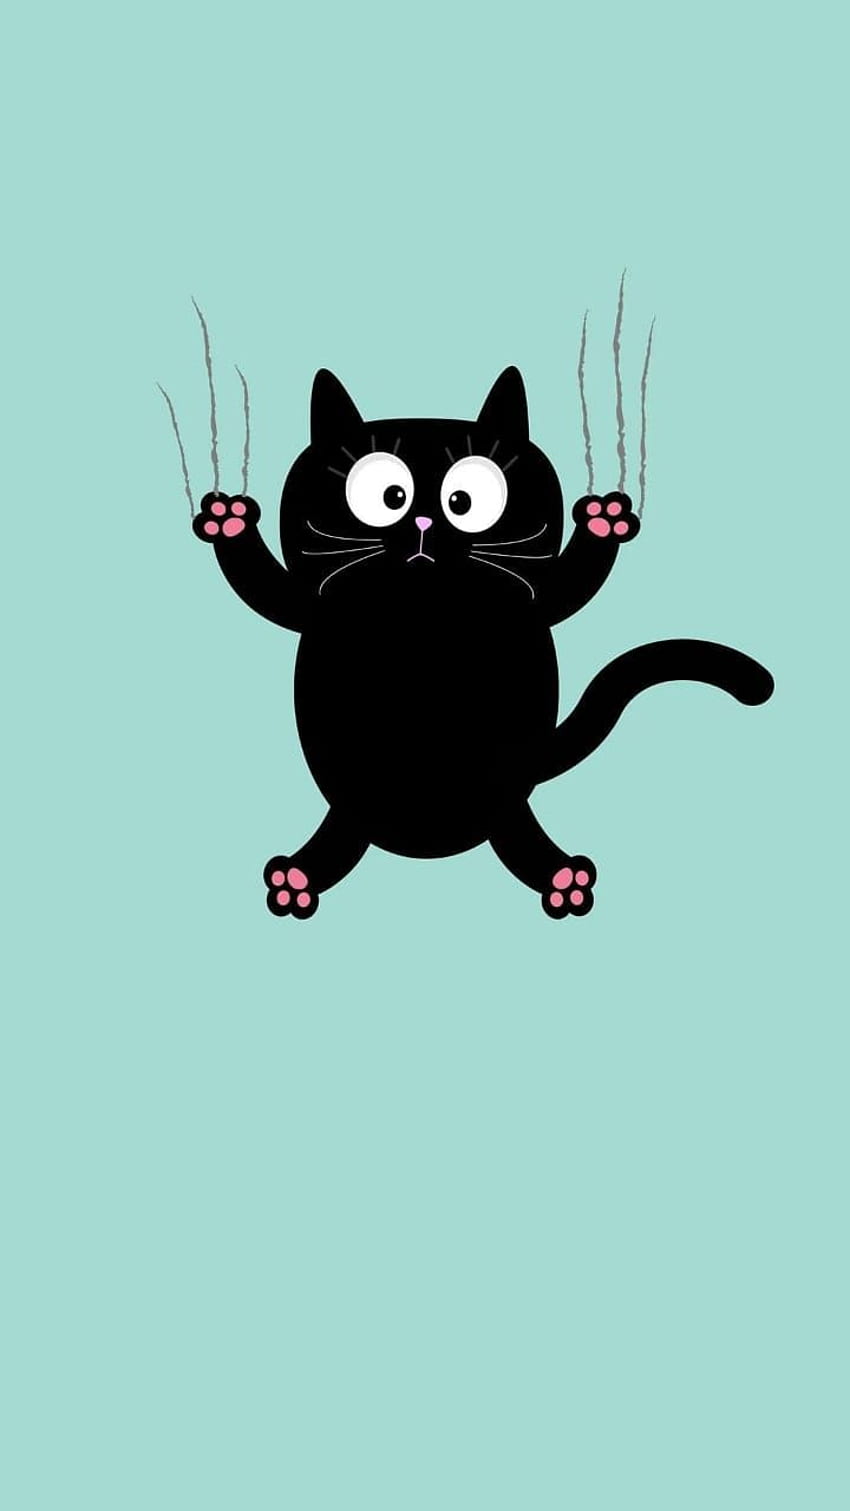 25 Funny Cartoon Cat Wallpapers  WallpaperSafari